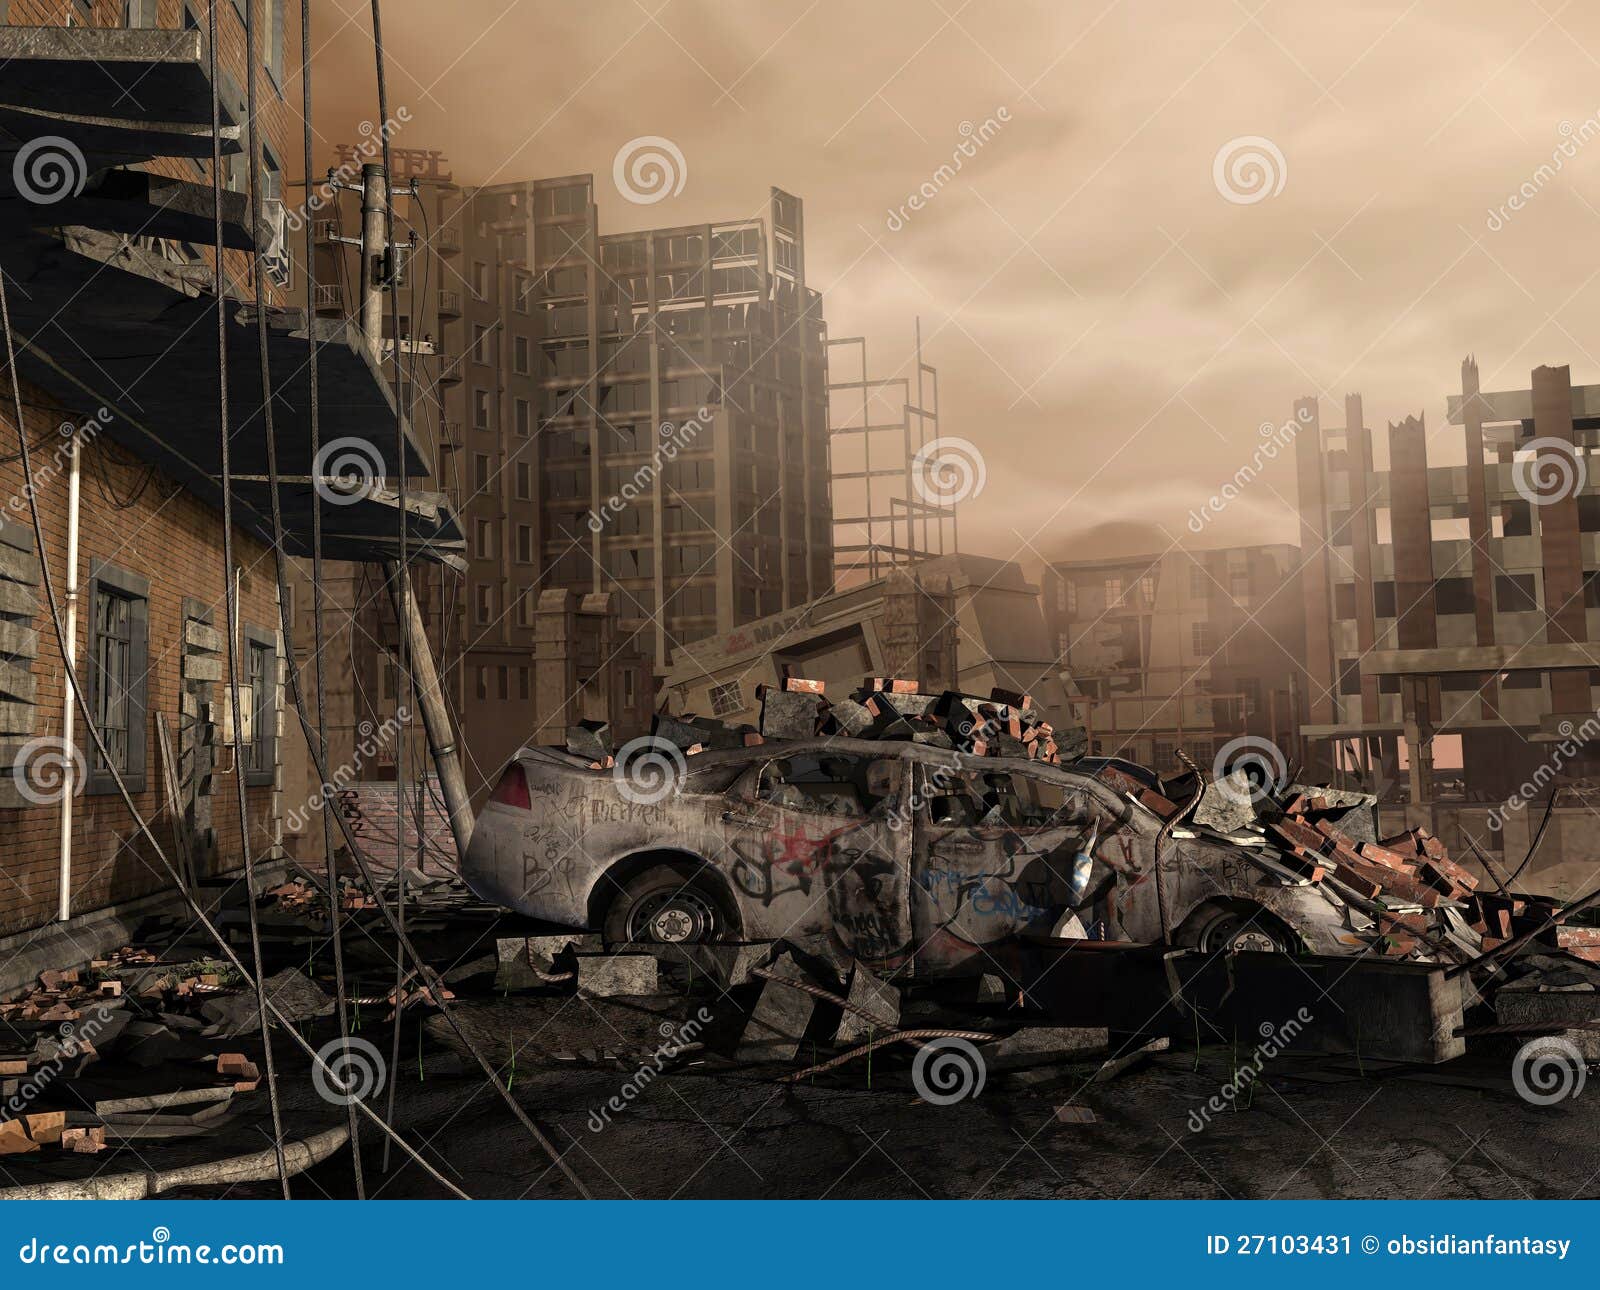 Destroyed city stock illustration. Image of city, illustration - 27103431